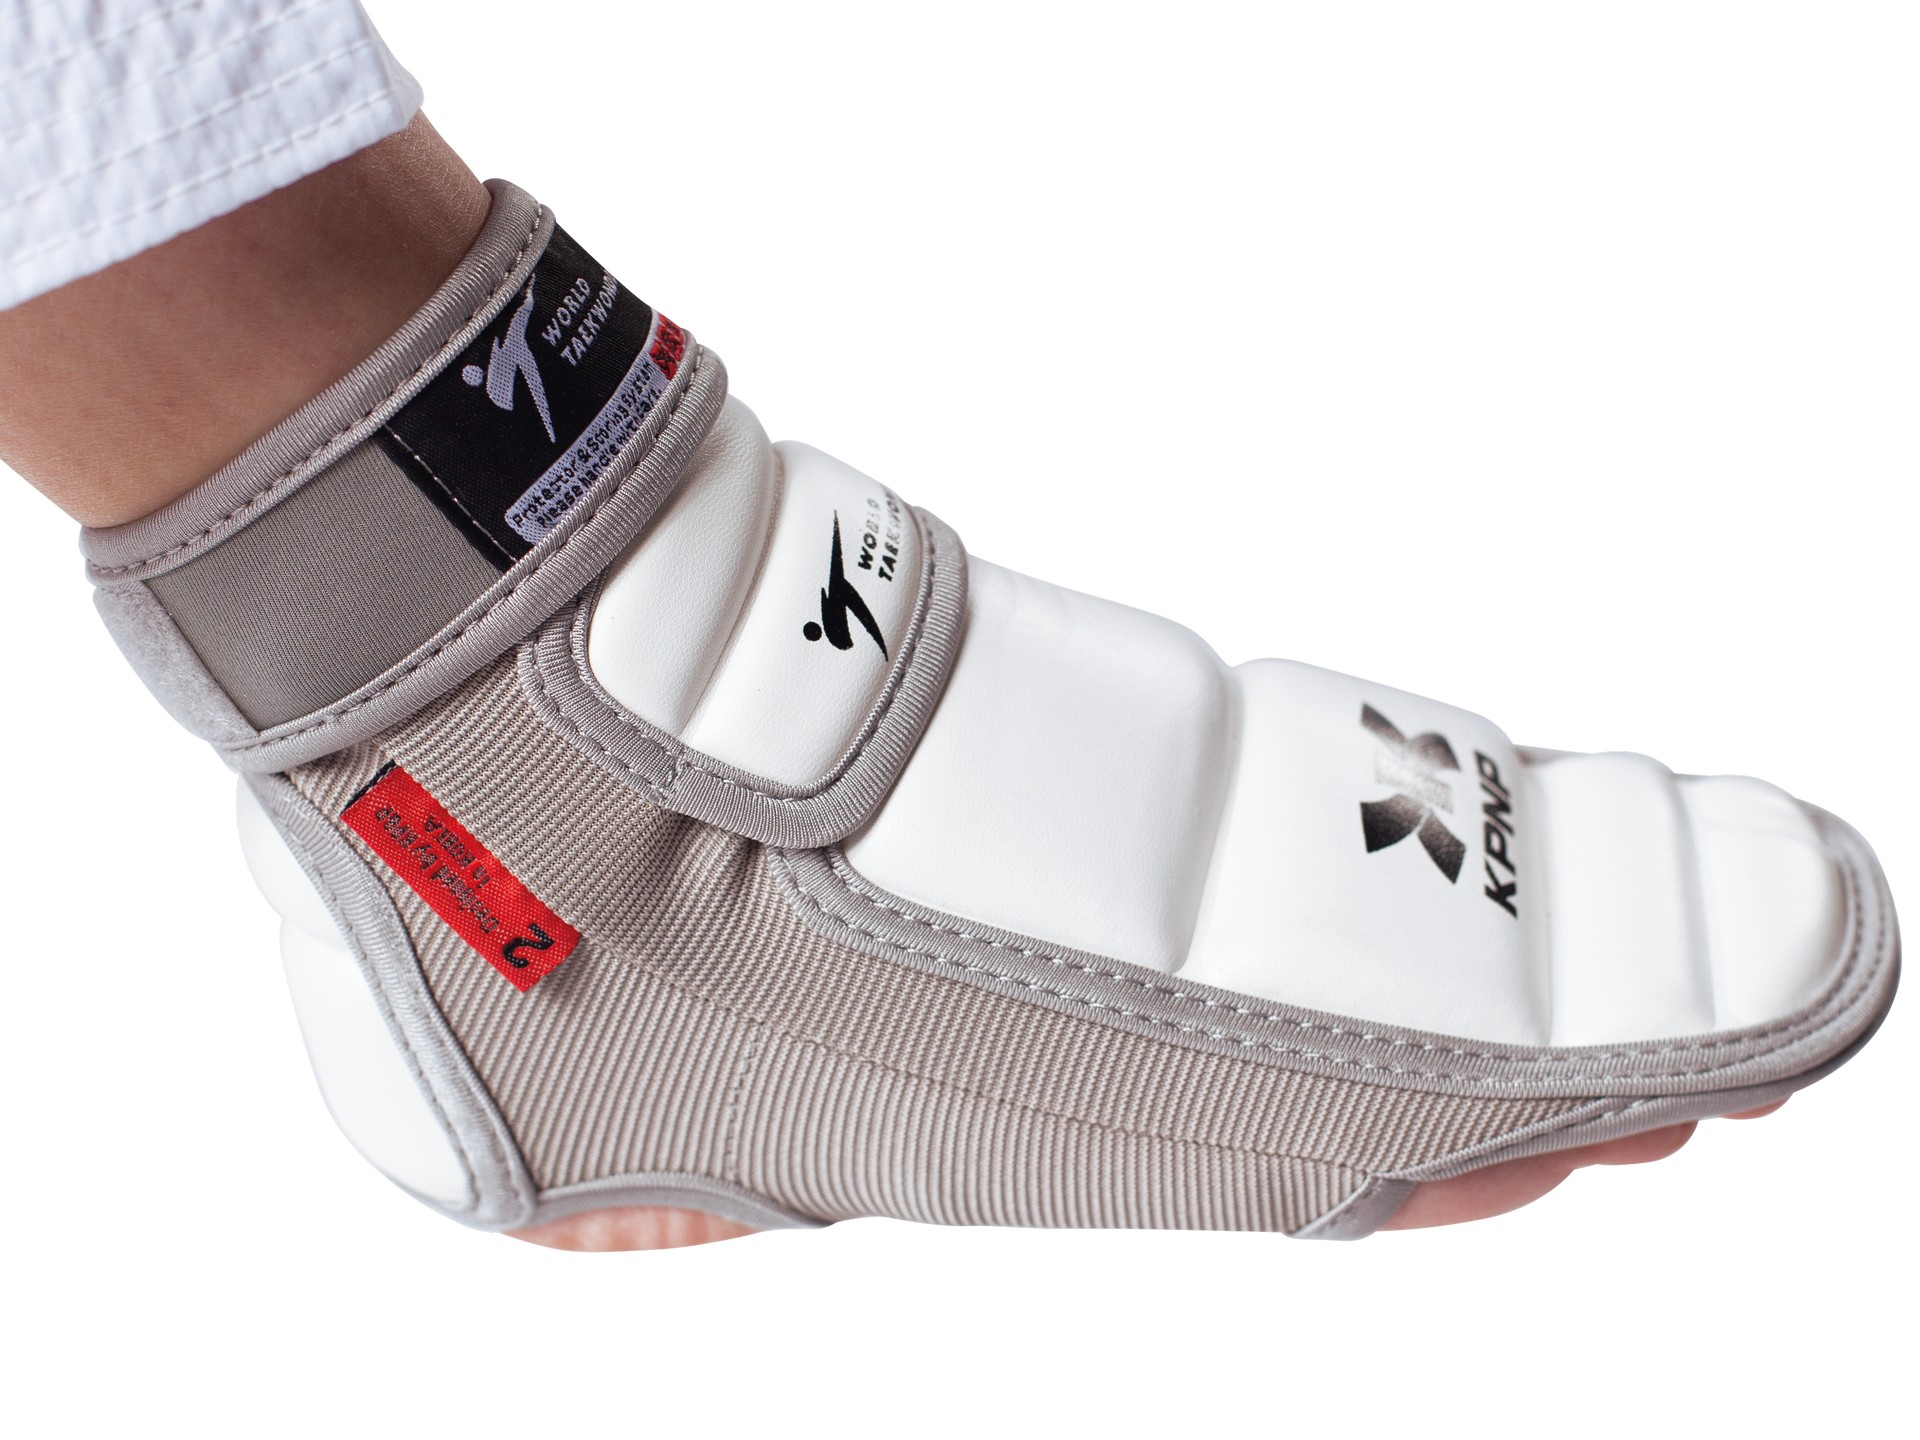 Promo E Foot Taekwondo Socks Foot Gloves Kpnp Sensor Pss Protector